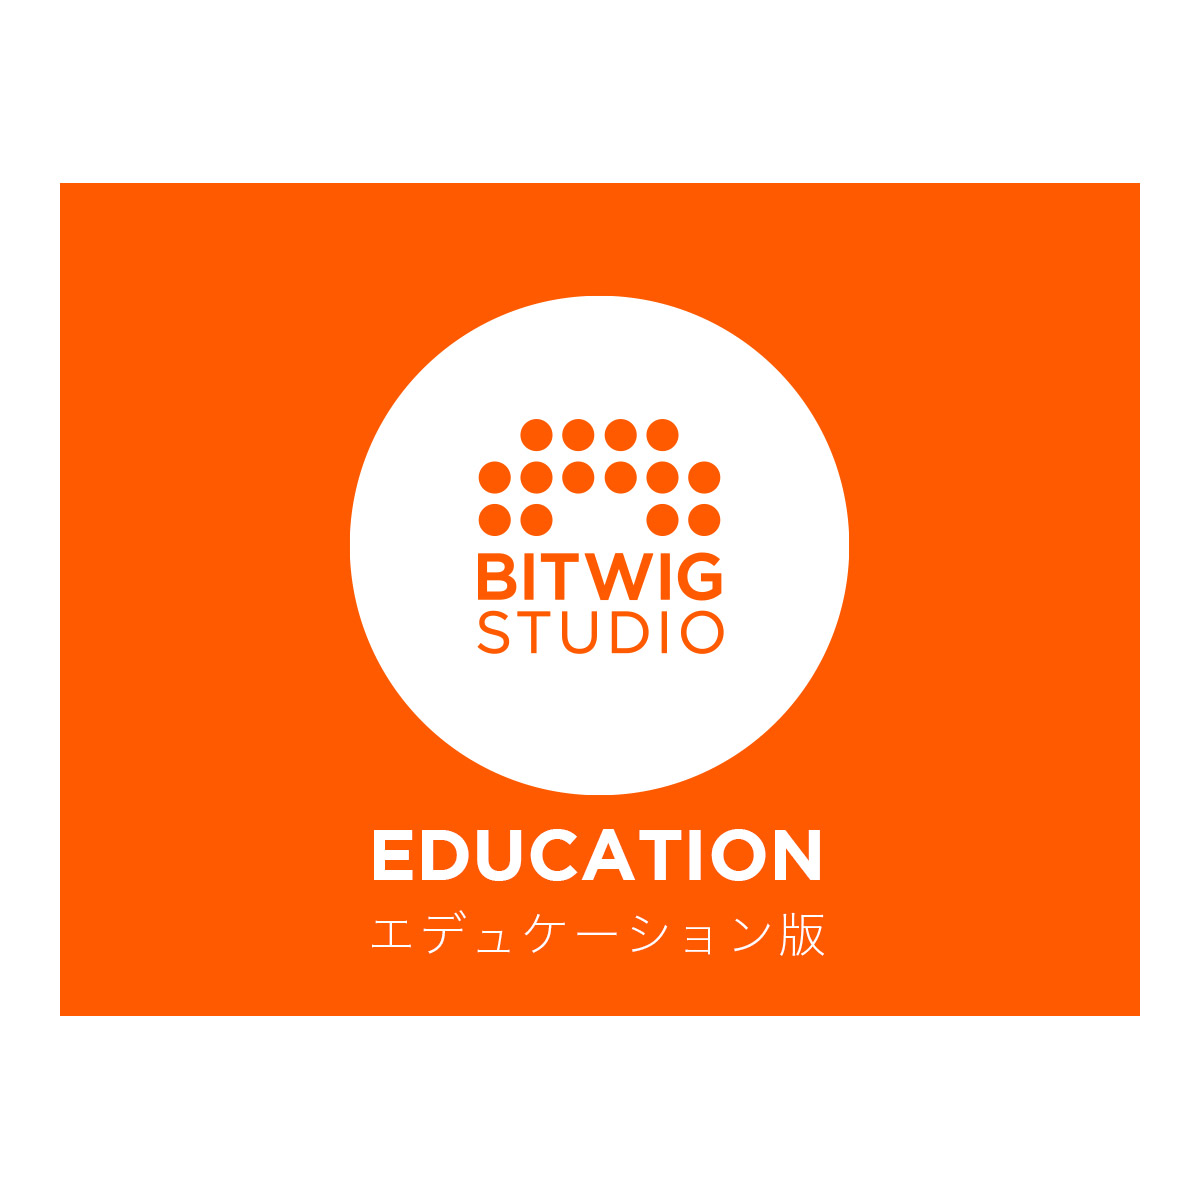 BITWIG Bitwig Studio アカデミック版 (エデュケーション版) [Version4] 【ビットウィグ】